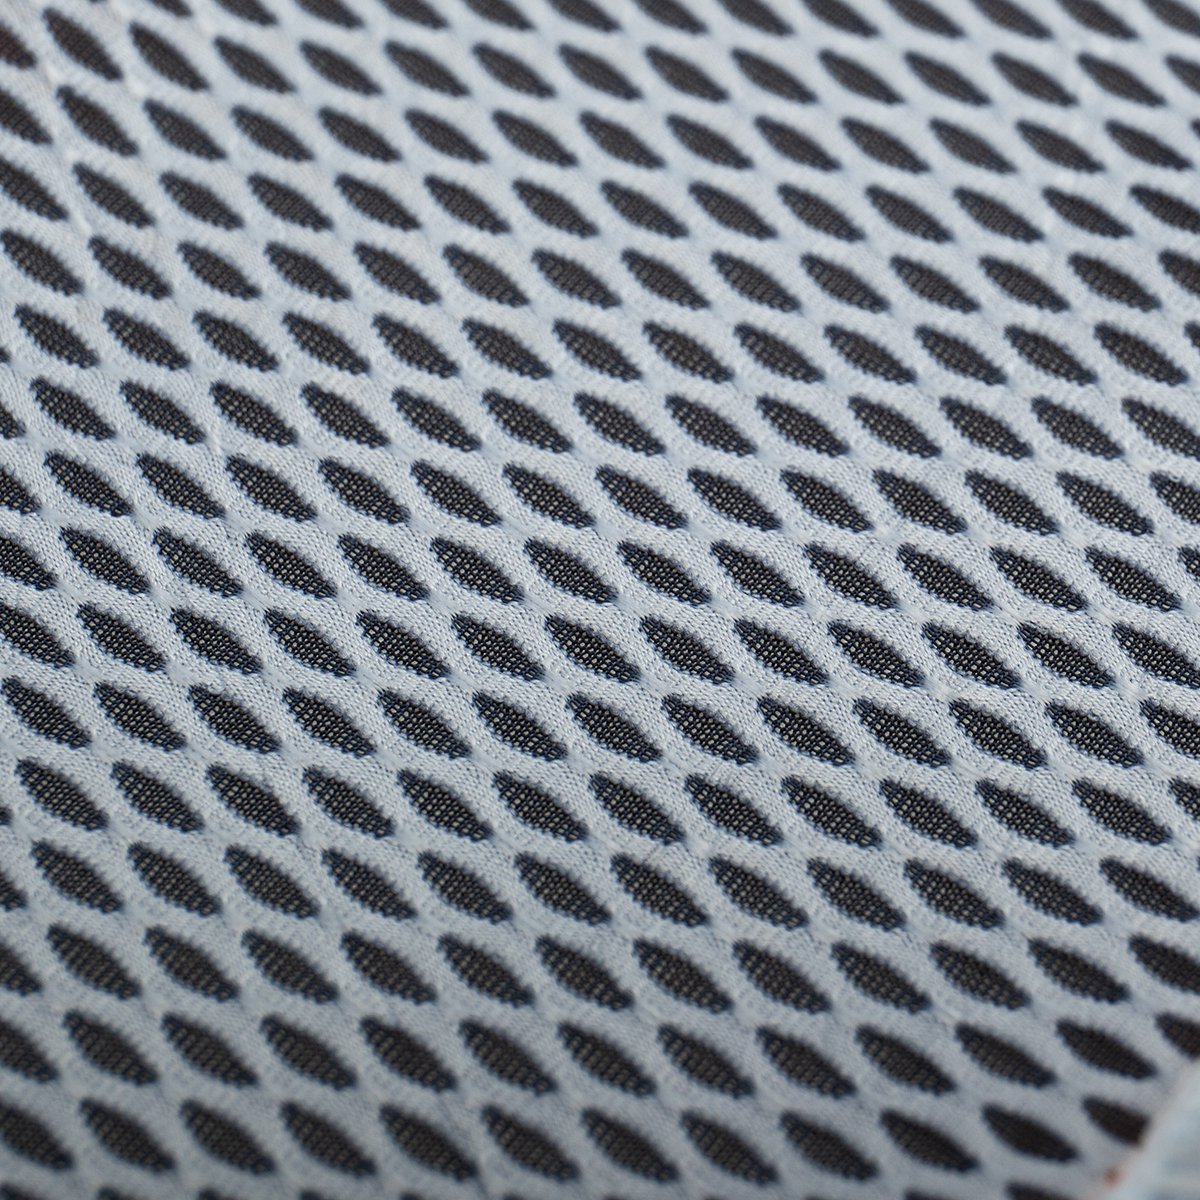 Cycling Jersey Fabric Close up